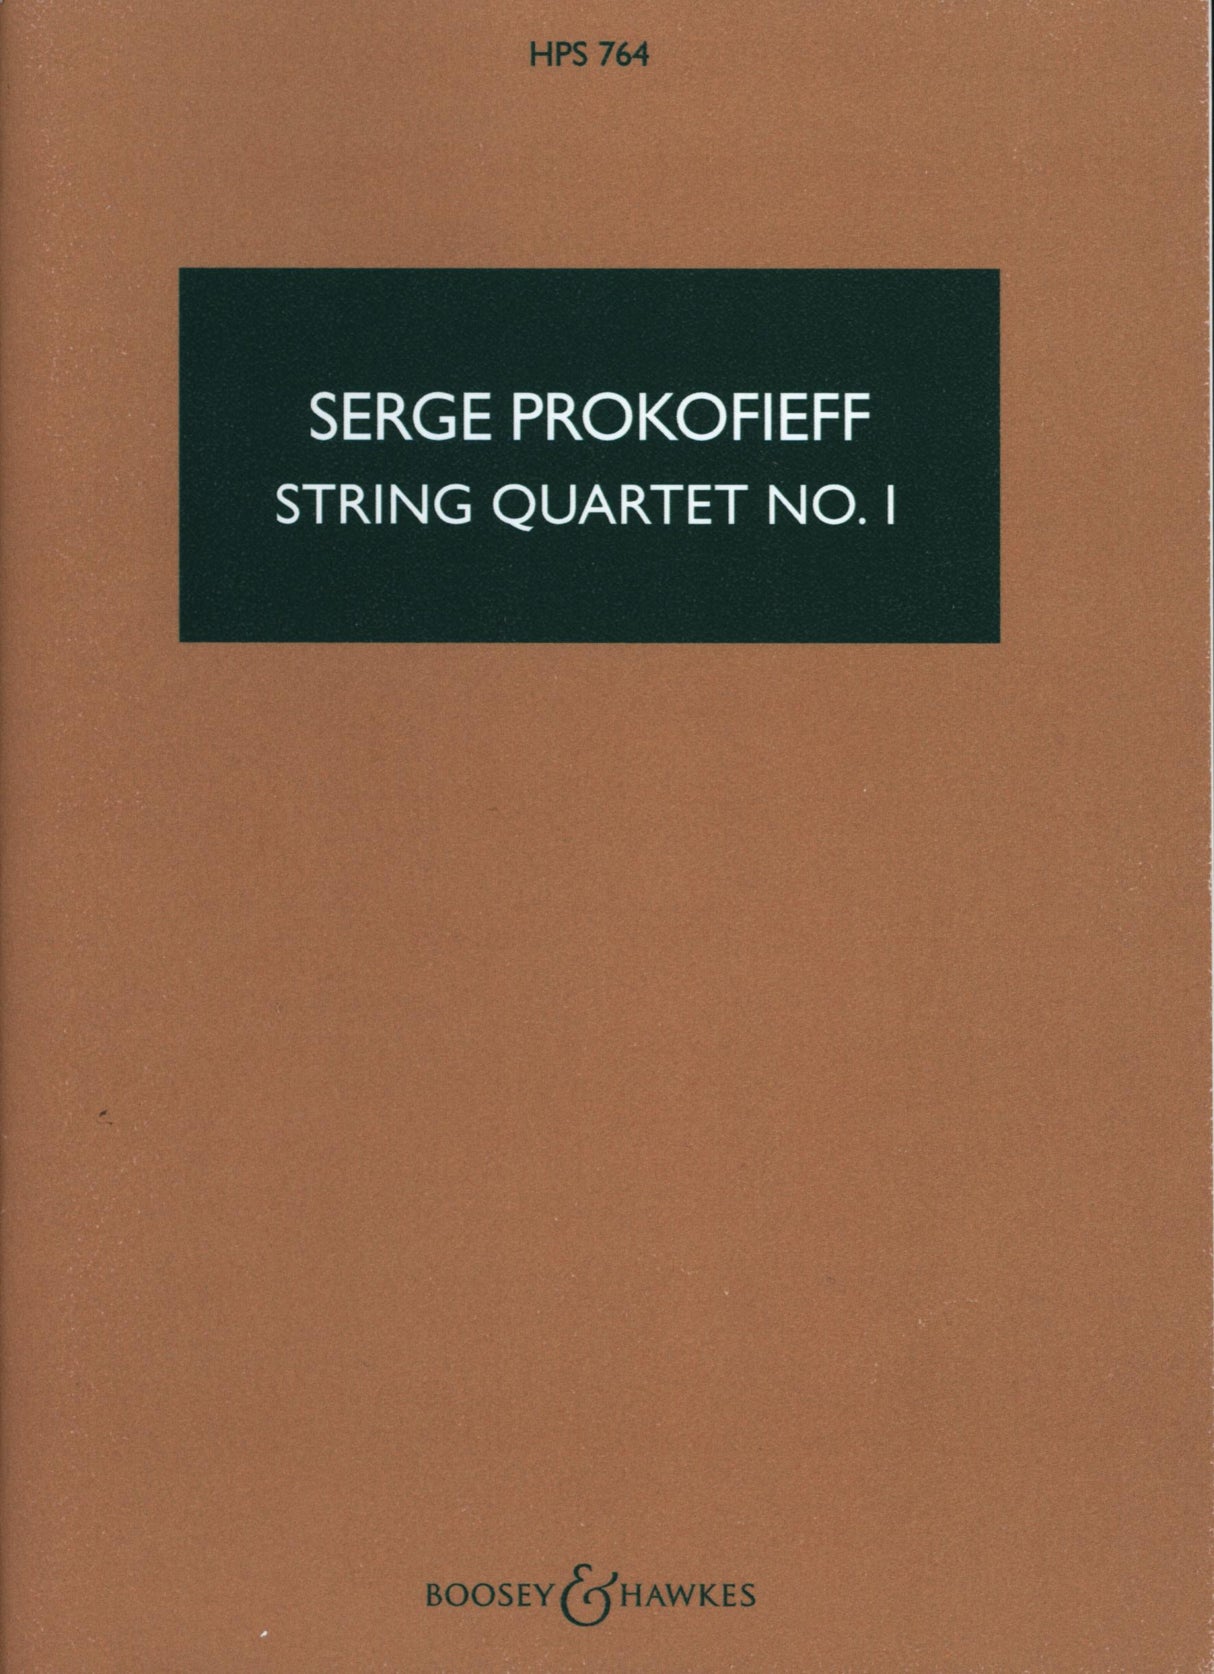 Prokofiev: String Quartet No. 1, Op. 50